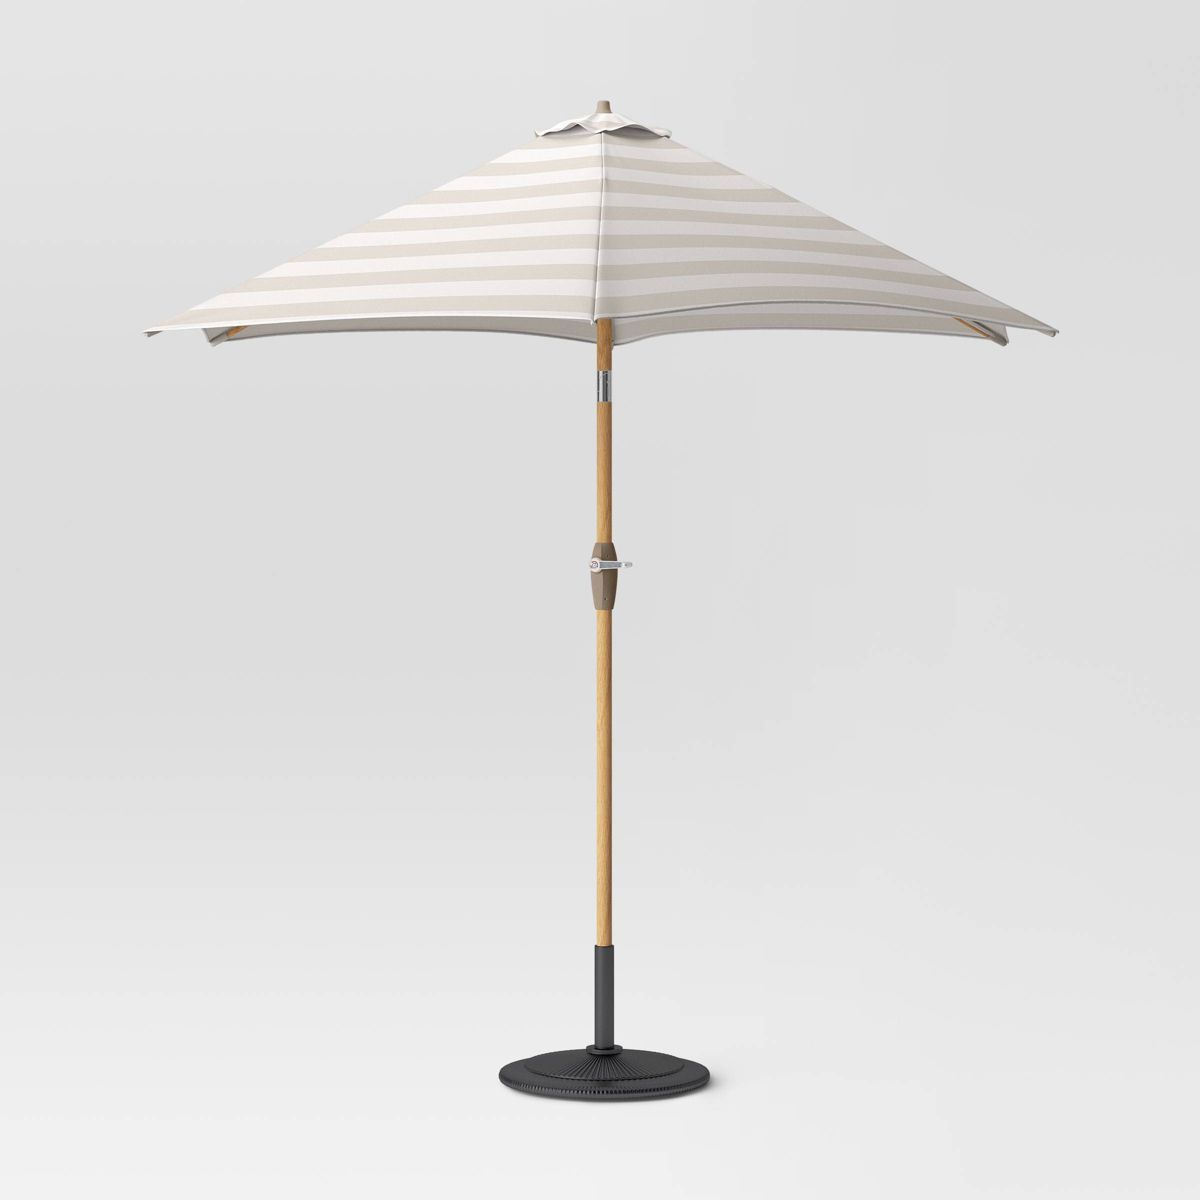 9' Round Cabana Stripe Outdoor Patio Market Umbrella with Light Wood Pole - Threshold™ | Target